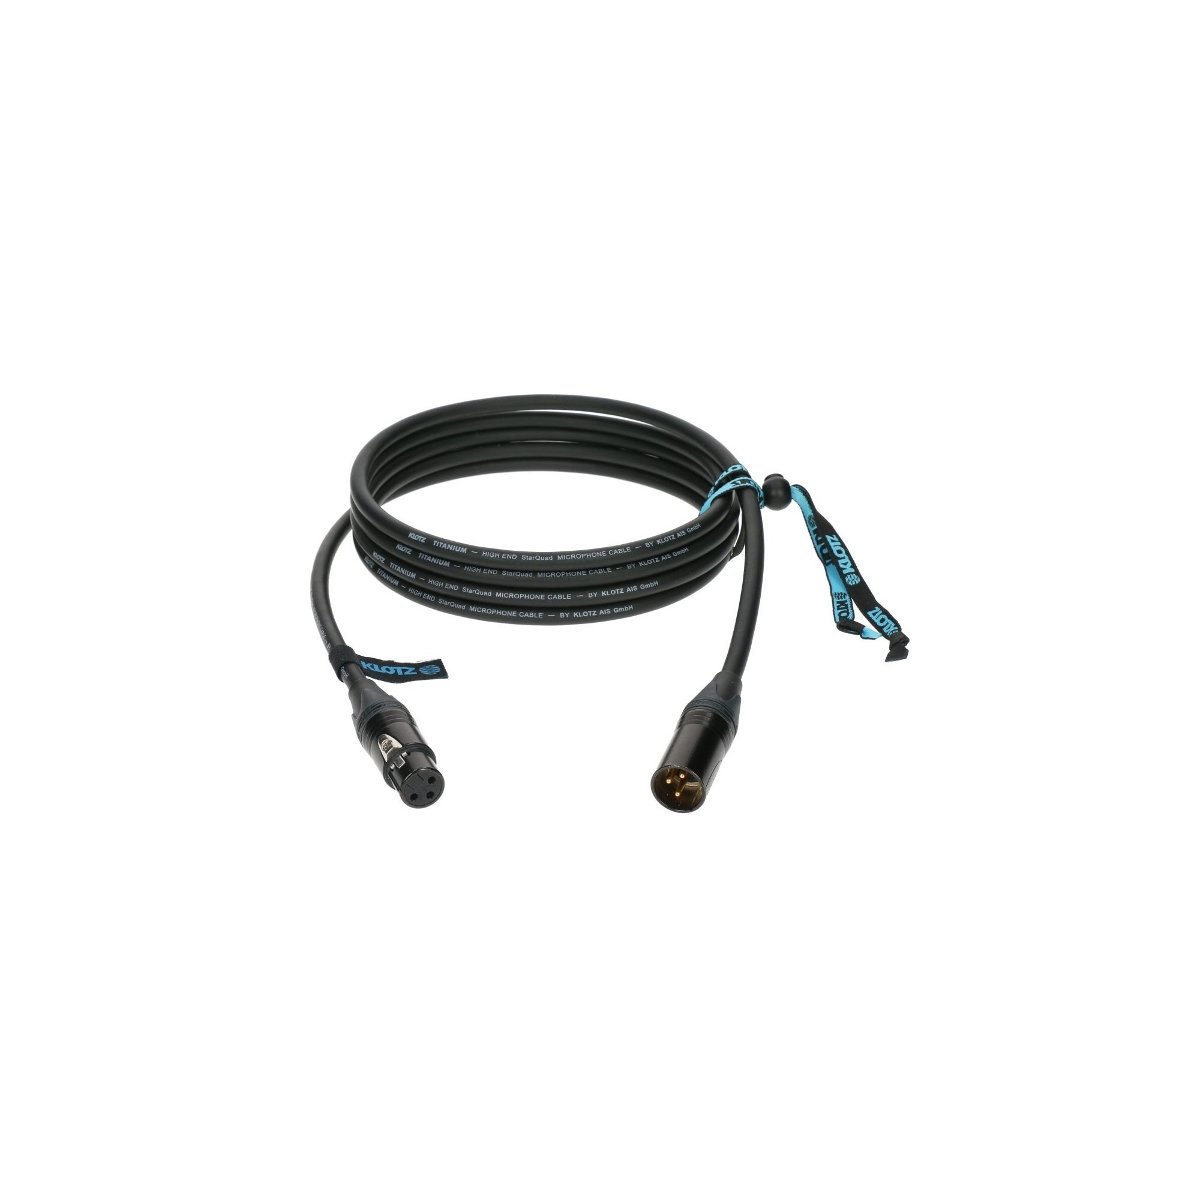 Фото - Кабель Klotz TI-M0100 profesjonalny kabel mikrofonowy hi-end serii Titanium - 1m 